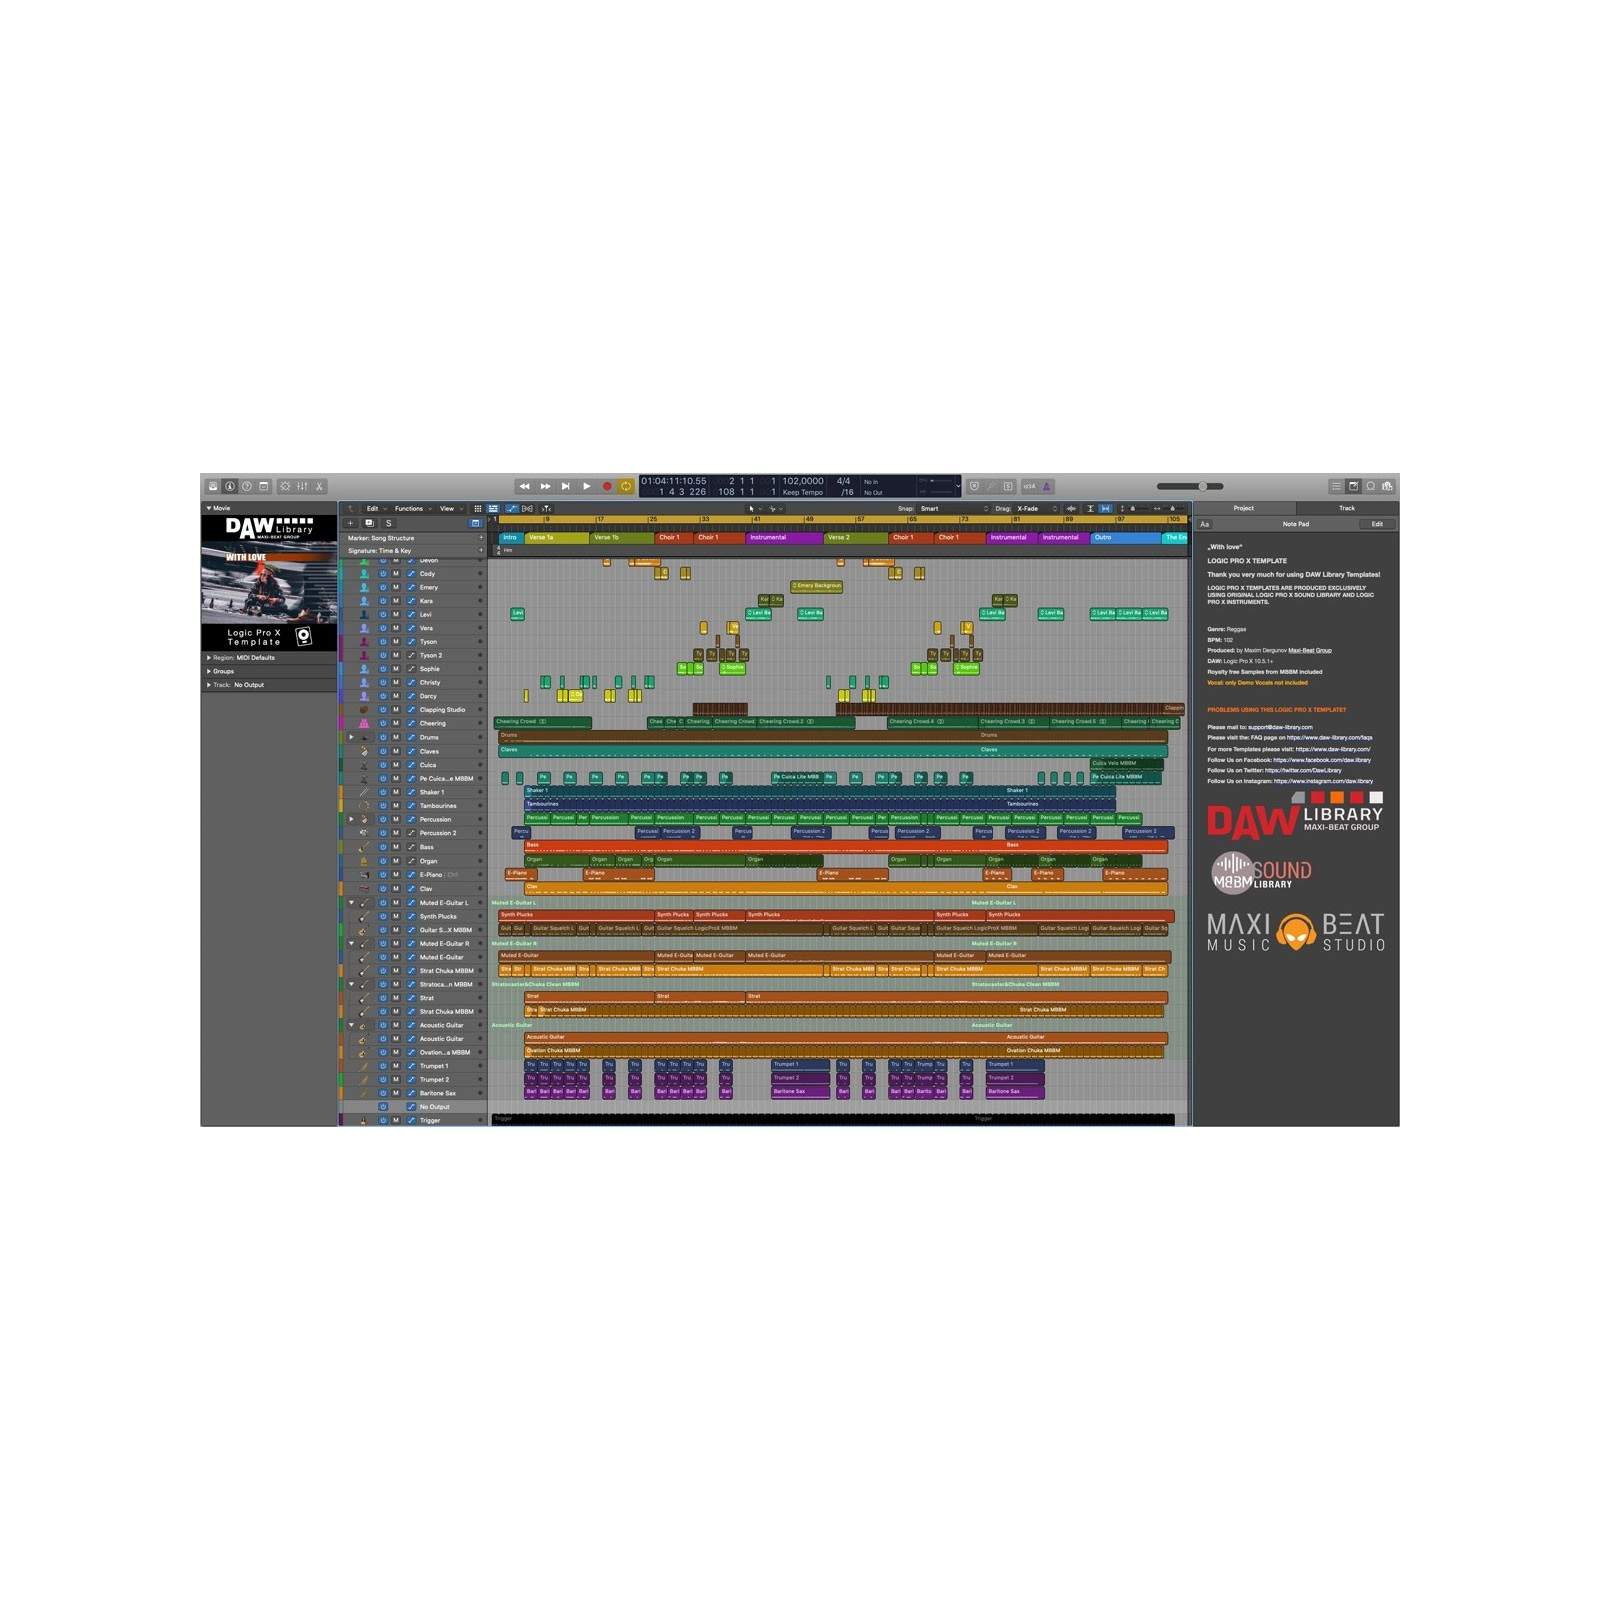 With love - Logic Template Maxi-Beat Music Studio - 2